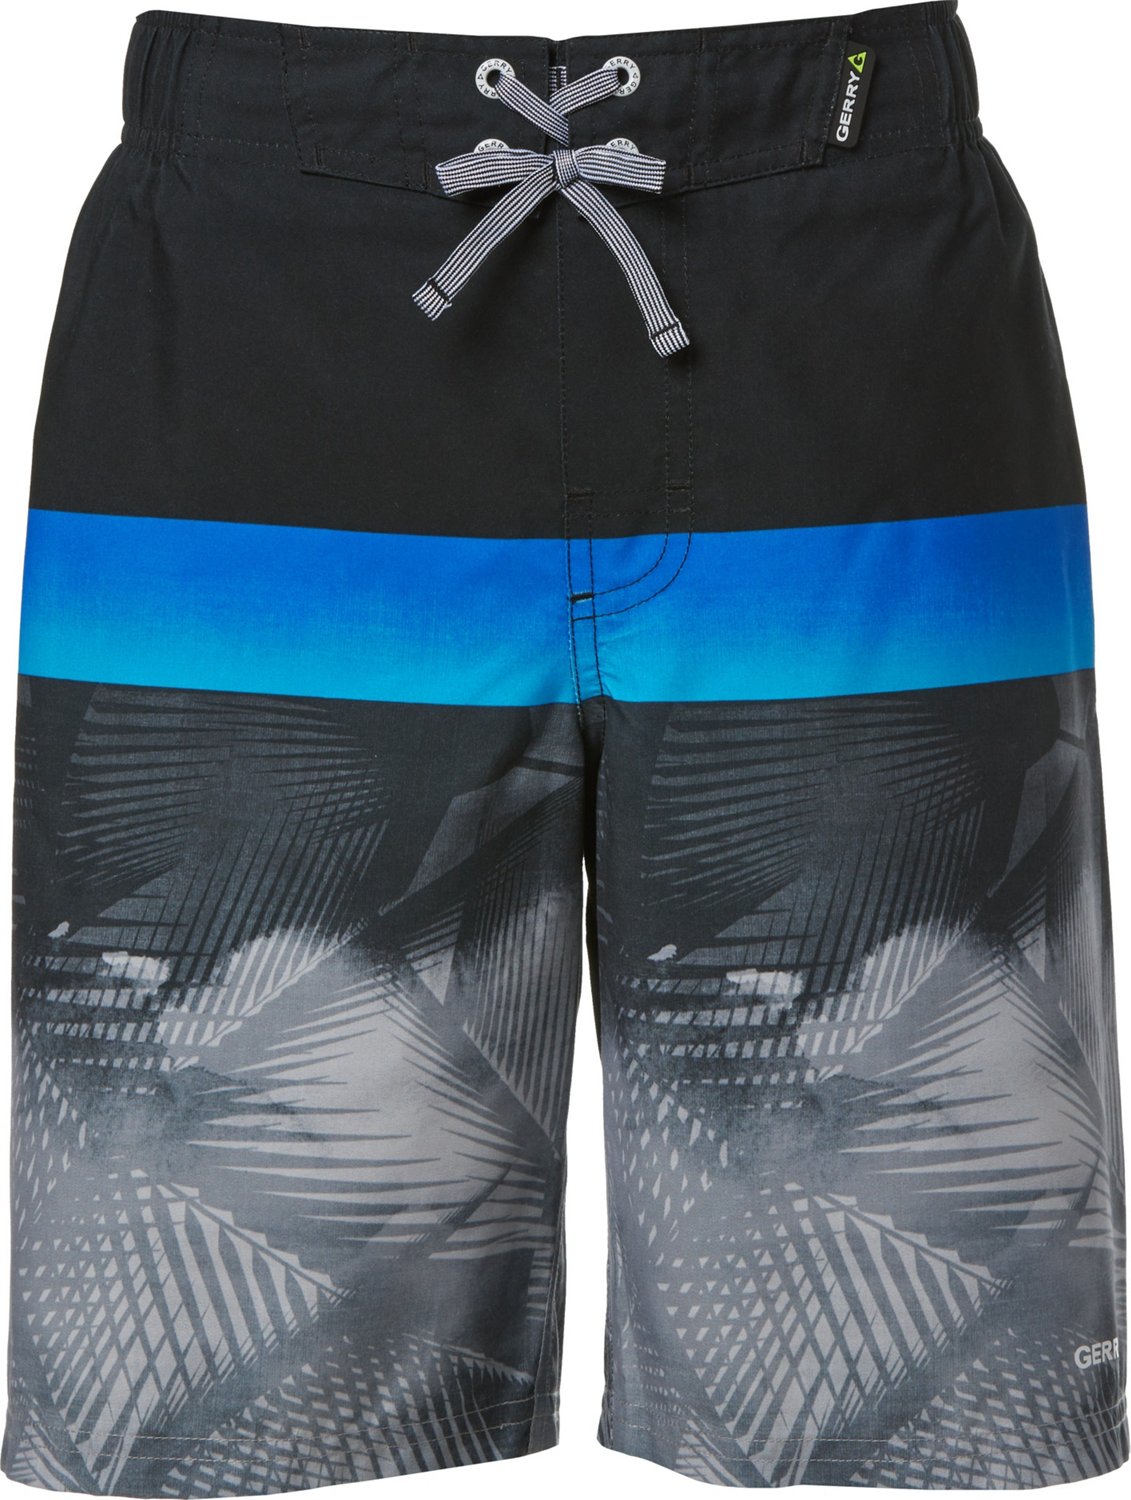 Skeleton Dinosaur Mens Printing Beach Board Shorts Sports Runnning Bathing Suit with Pockets 